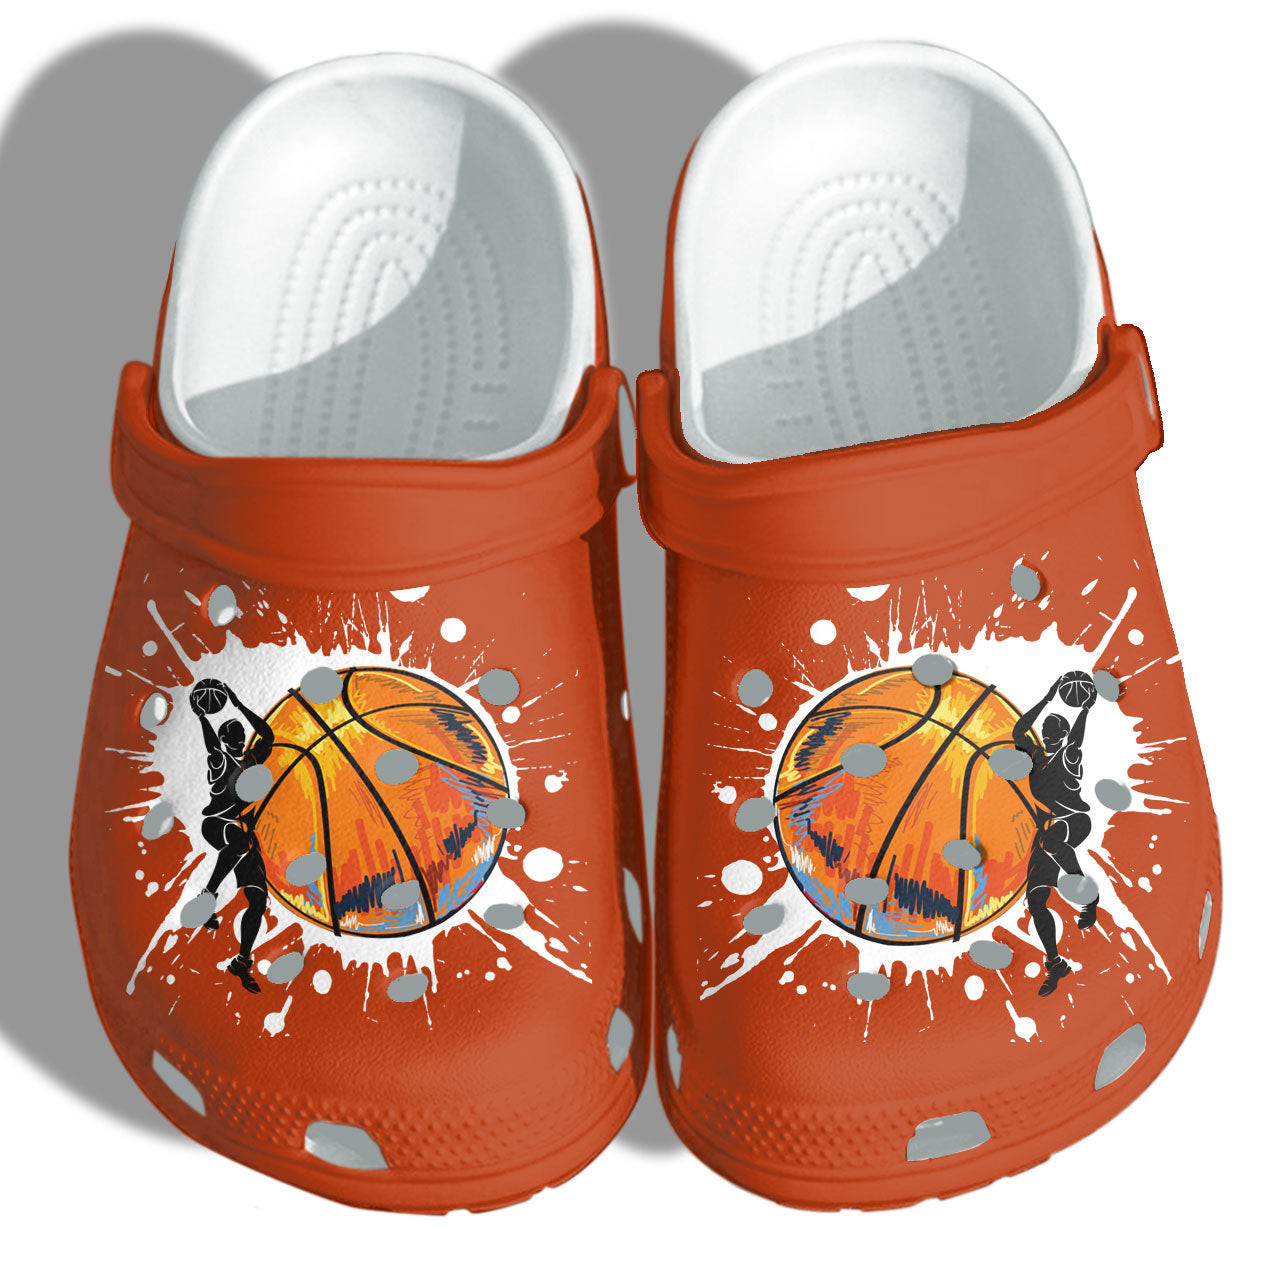 Basketball Custom Crocs Clog Shoes For Men Women - Basketball Sport Funny Outdoor Crocs Clog Shoes